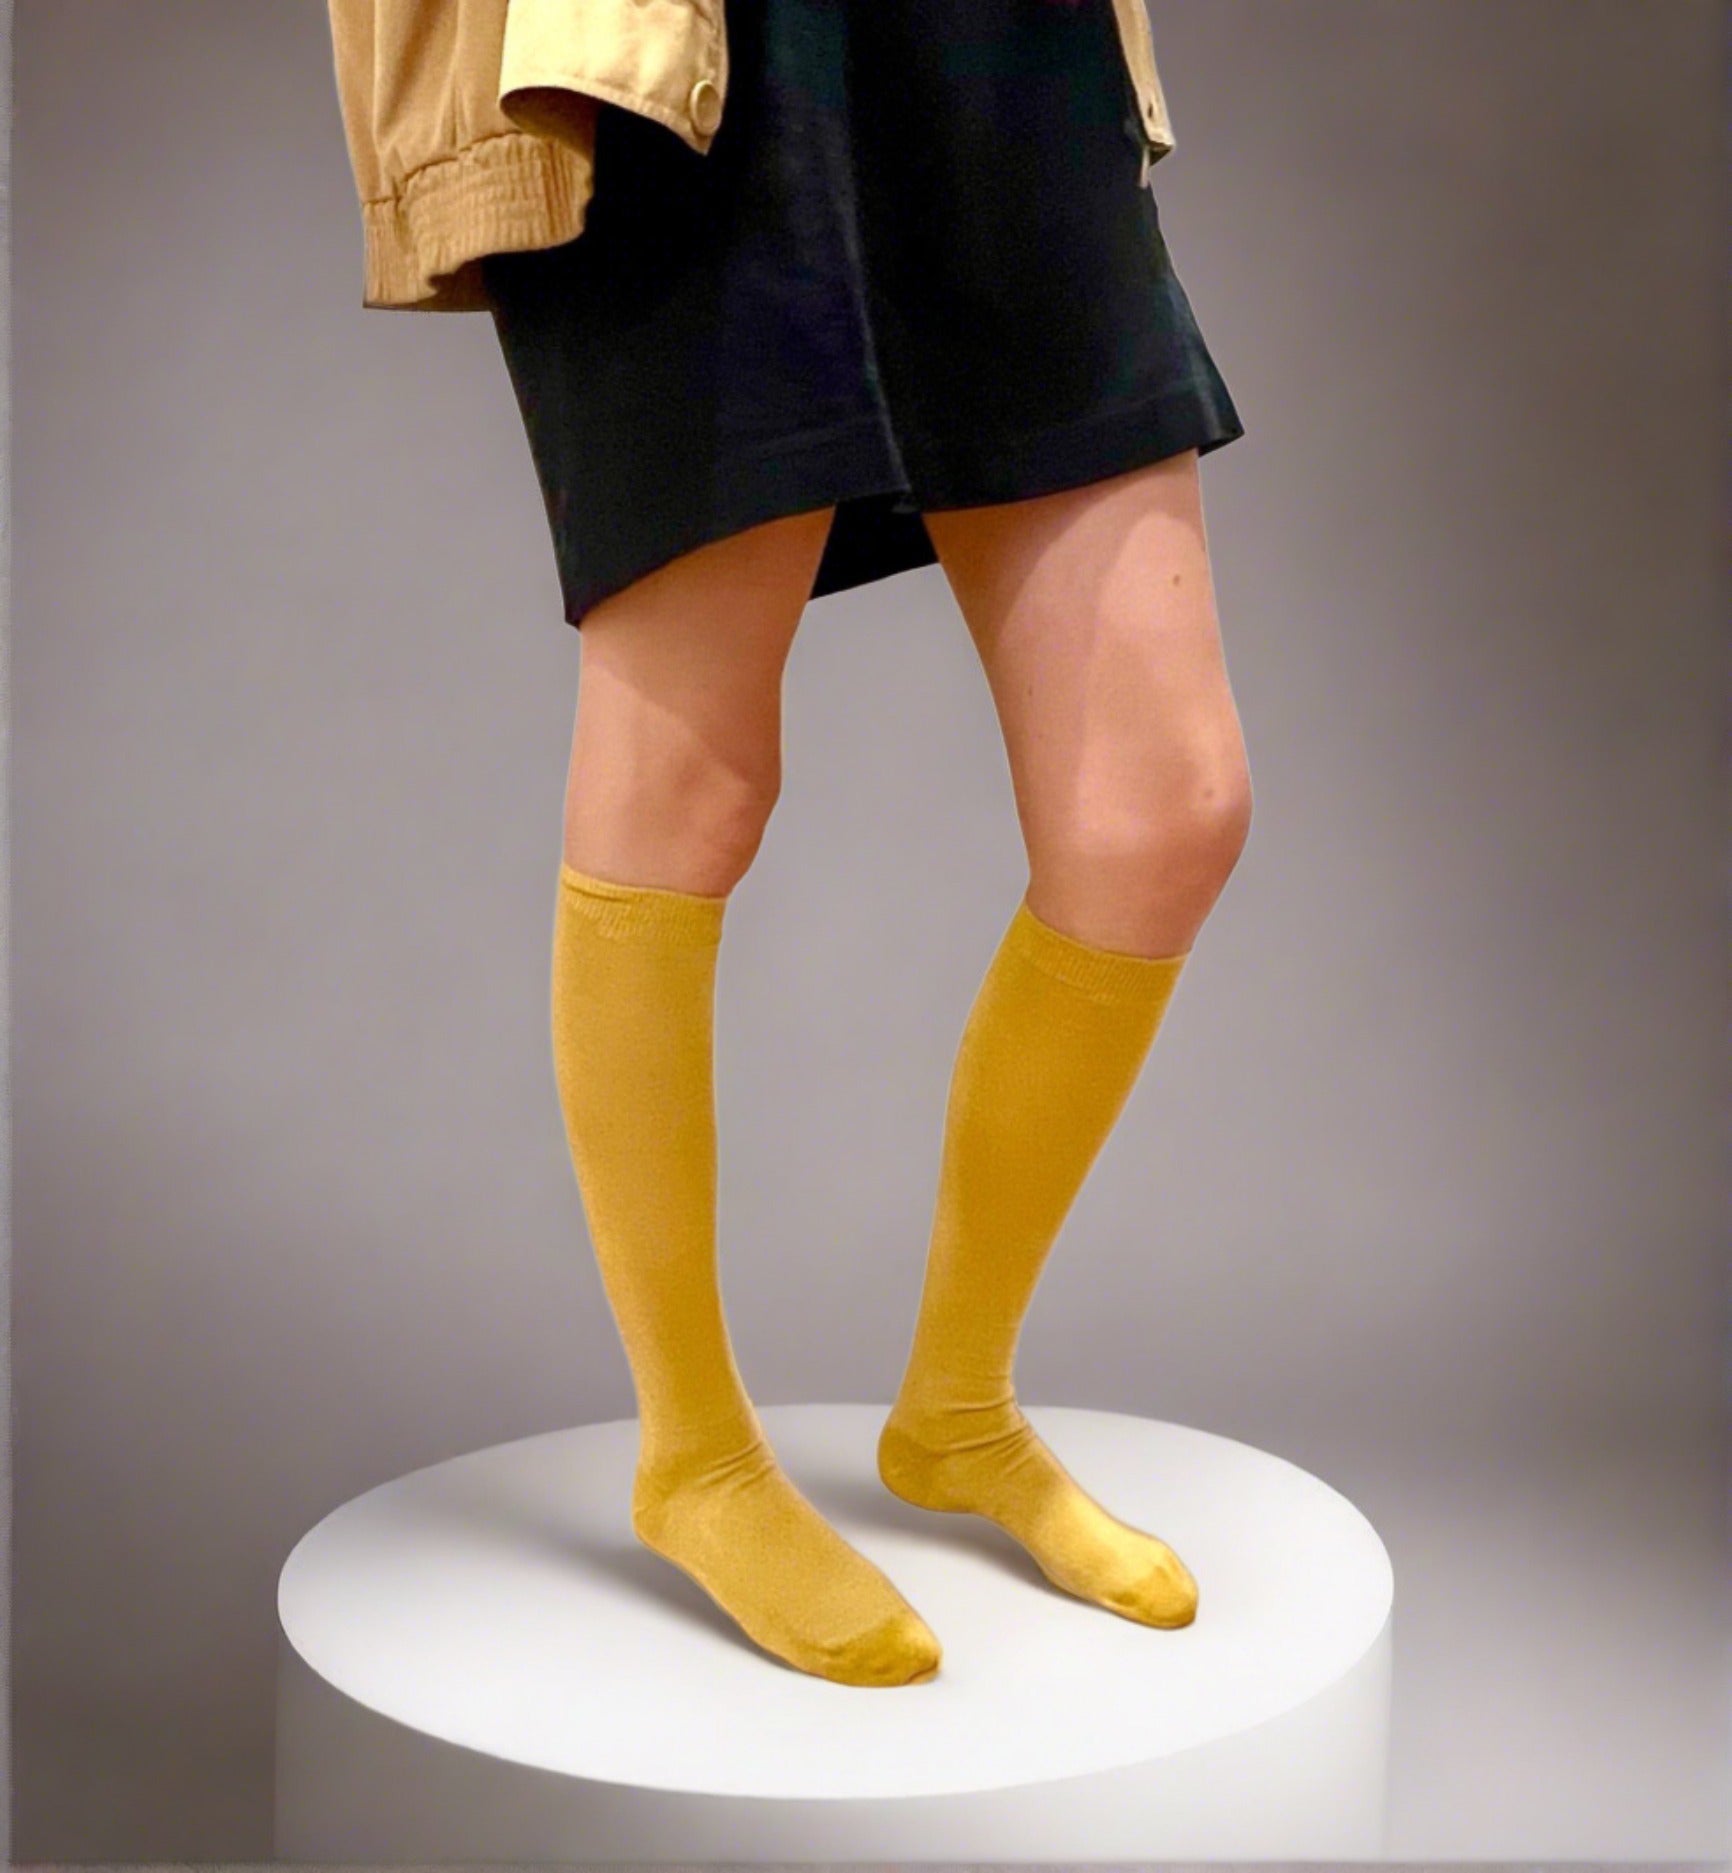 Merino Wool Women's Knee High Socks in Mustard - Aussie Made - The Sockery